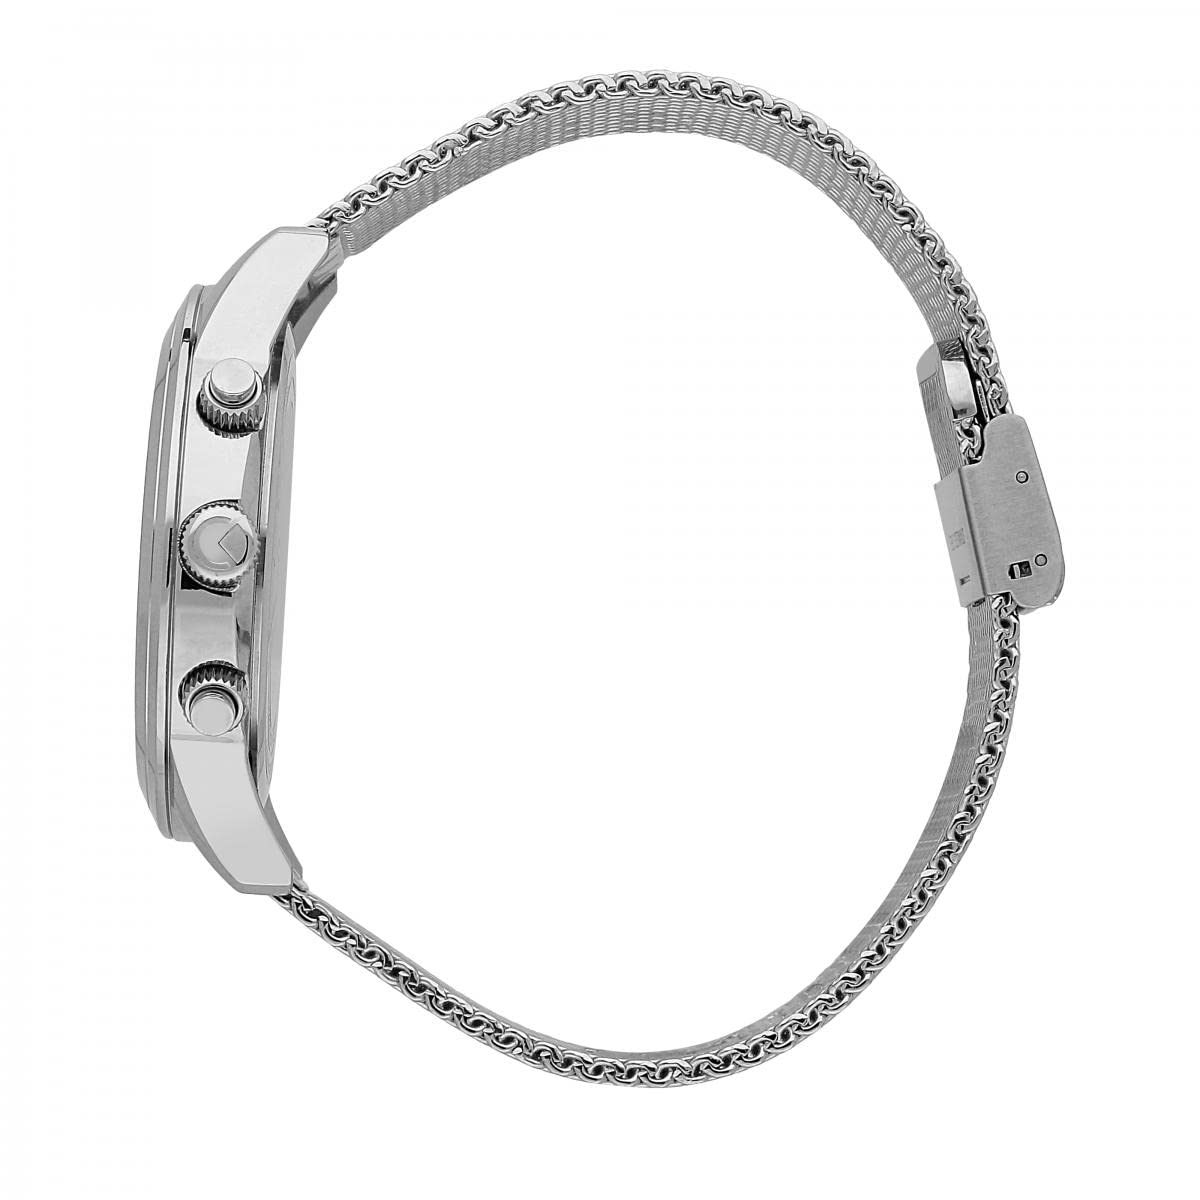 SECTOR No Limits Analog R3253540004, Silver, 45mm, Bracelet